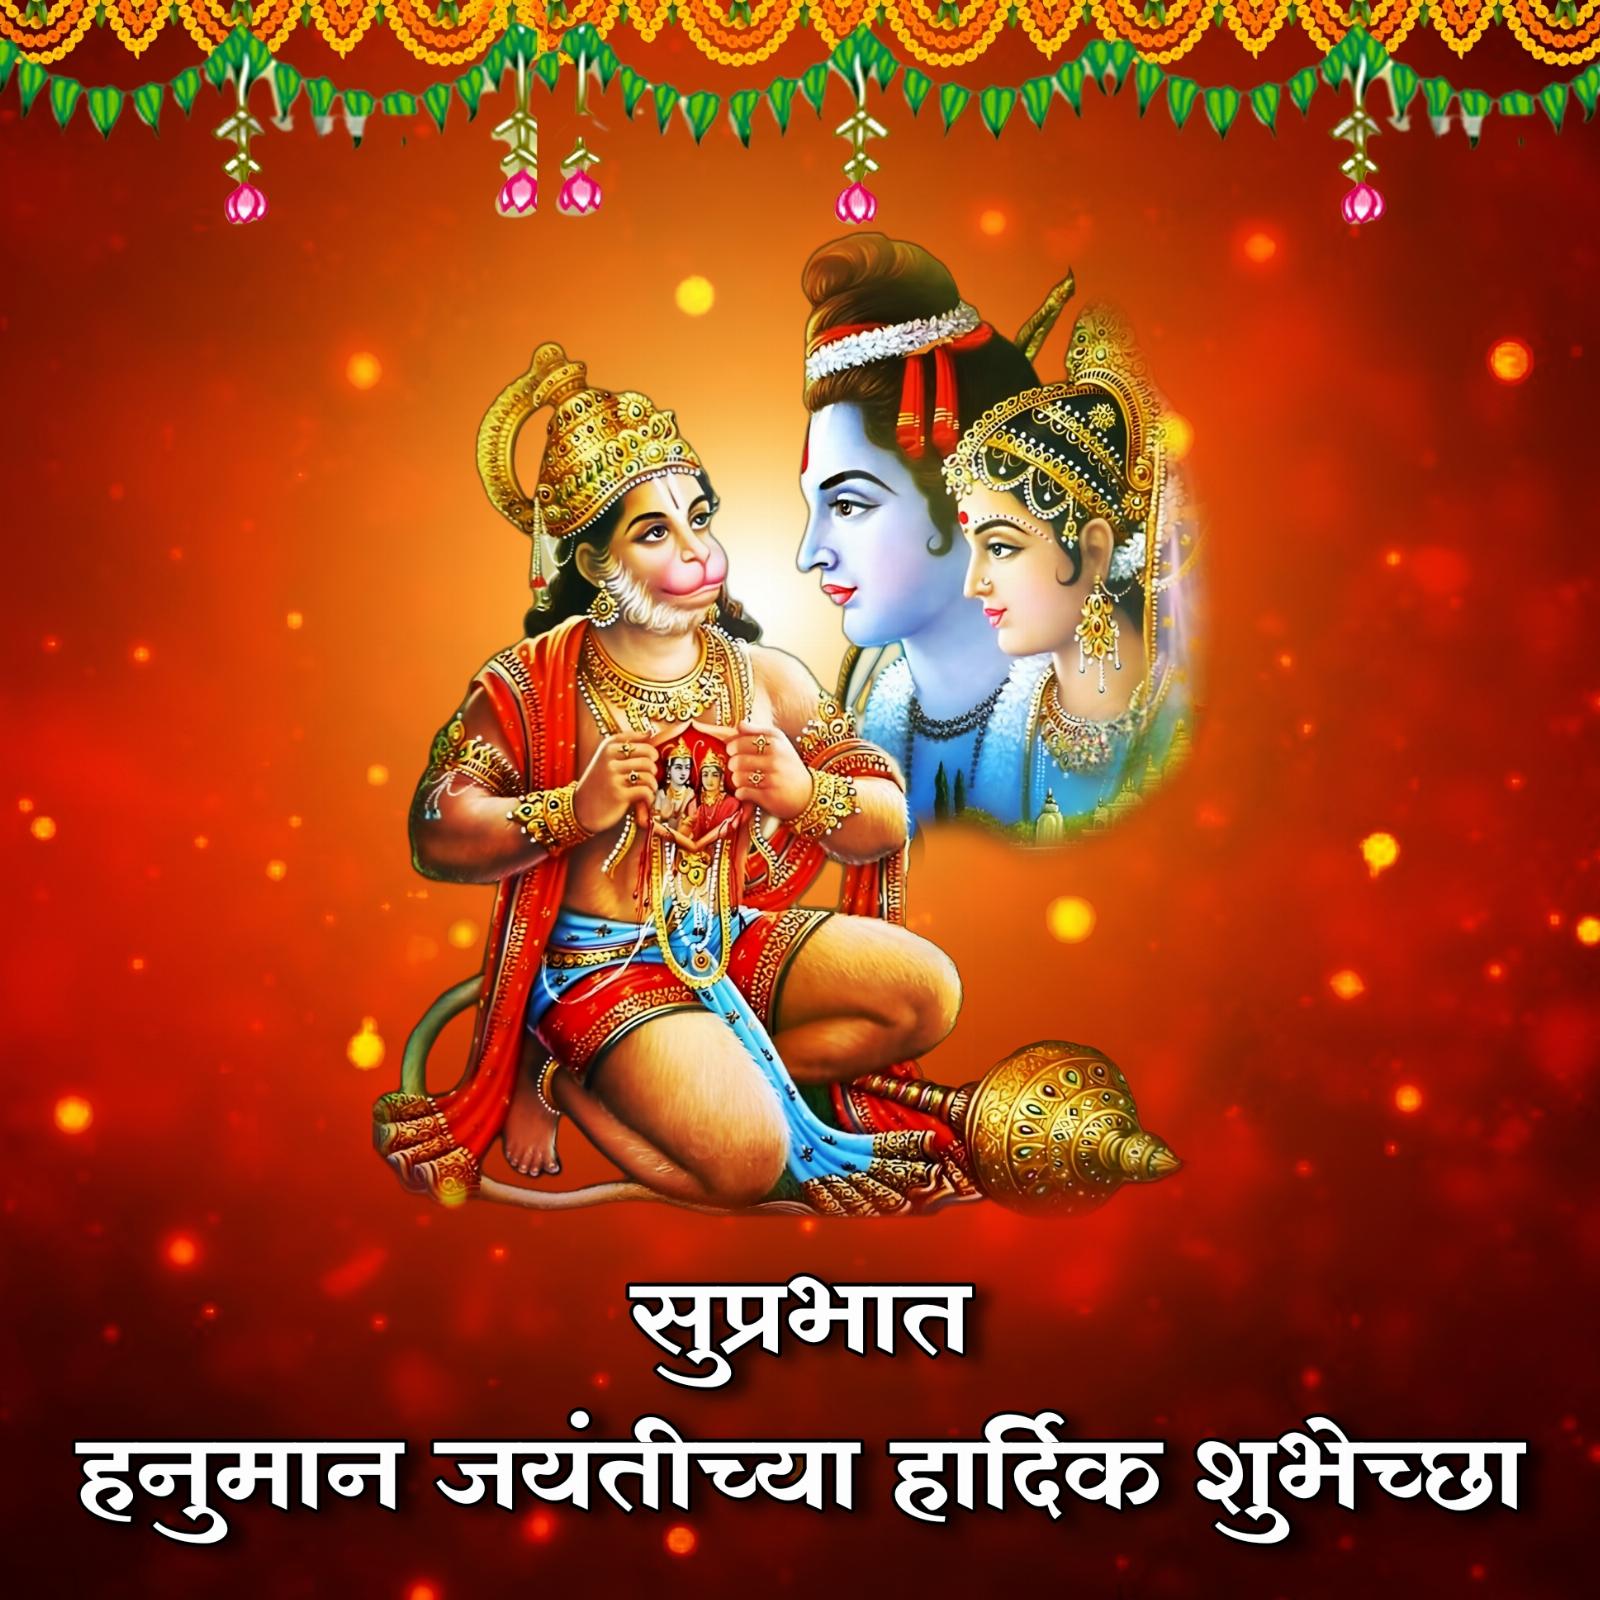 Suprabhat Hanuman Jayanti Chya Hardik Shubhechha Images in Marathi